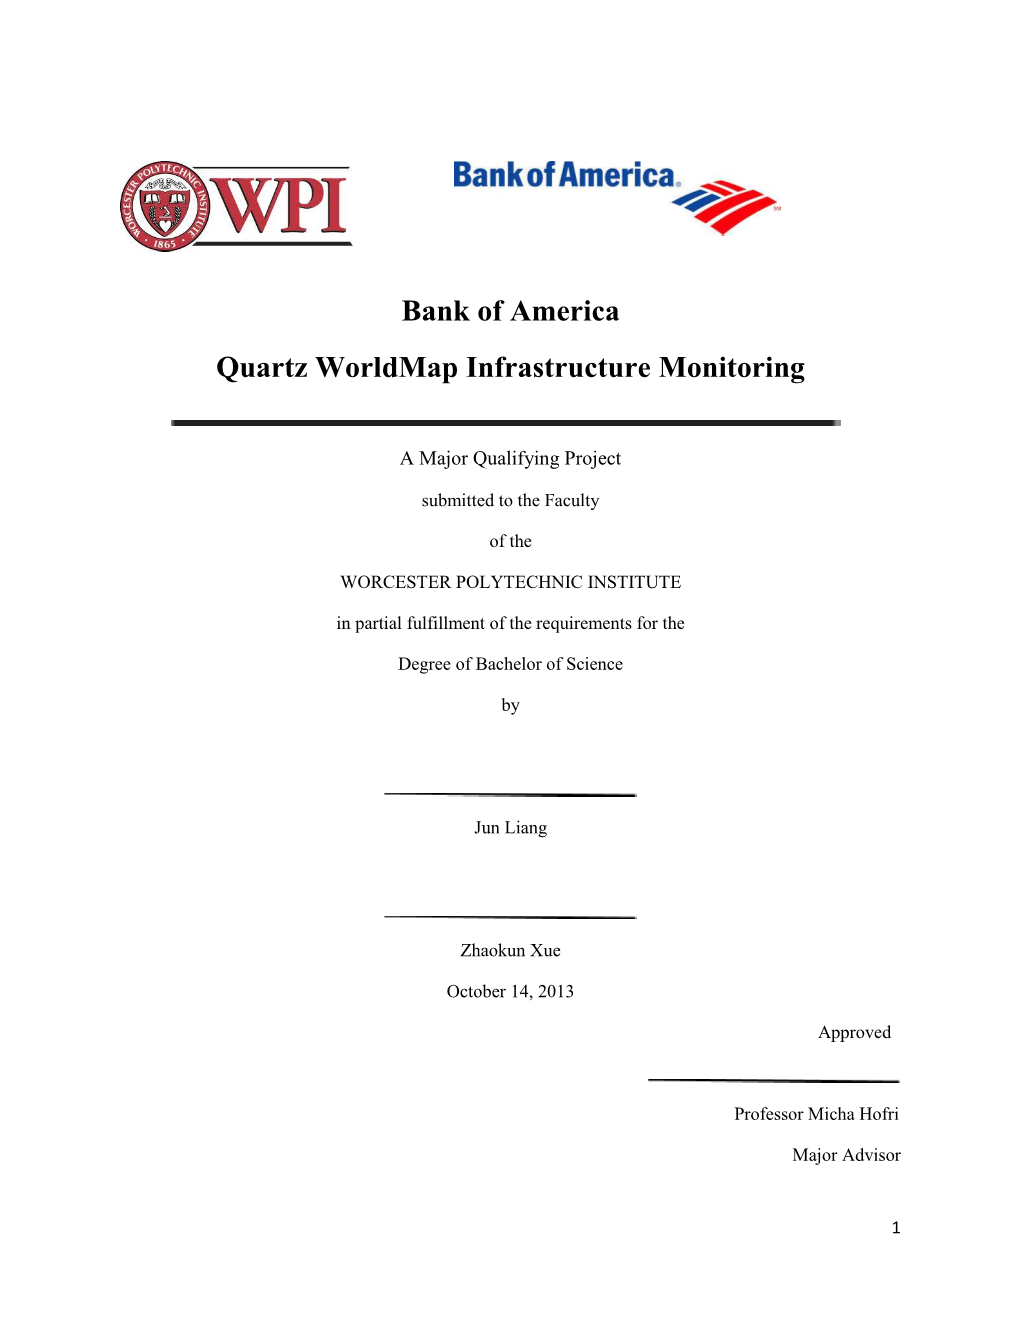 Bank of America Quartz Worldmap Infrastructure Monitoring